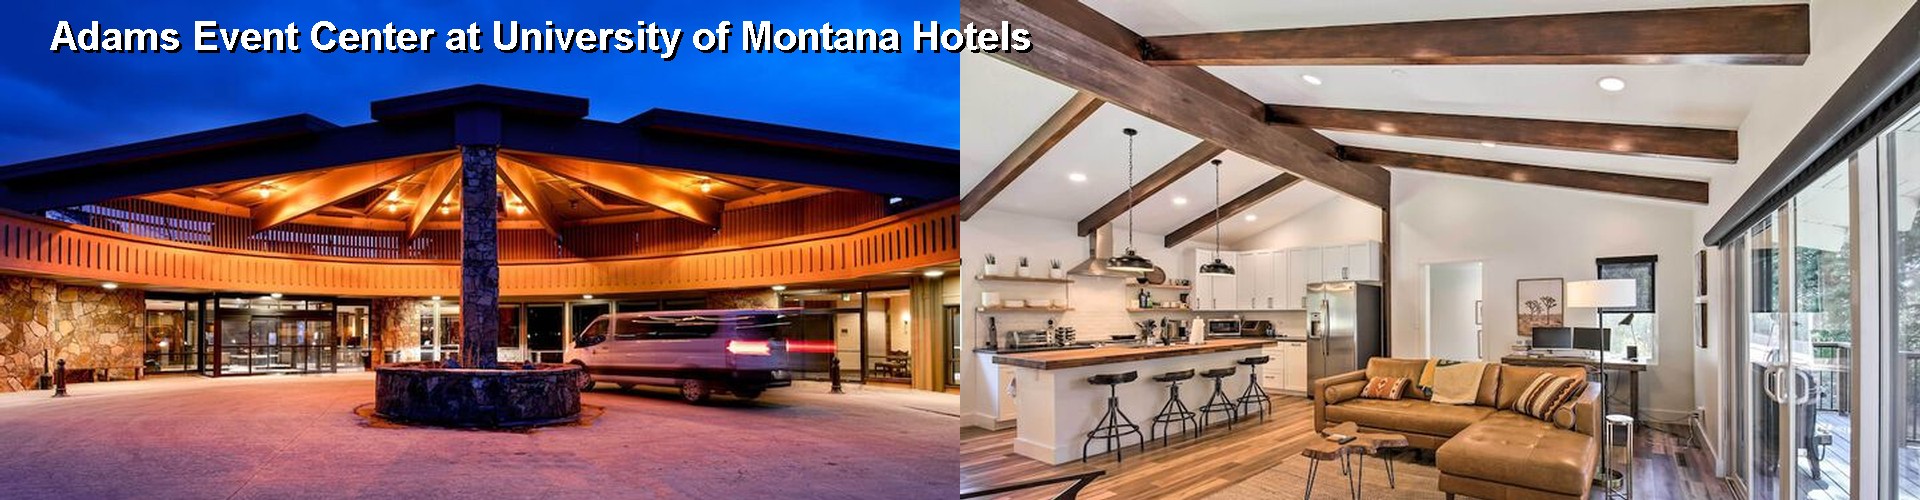 5 Best Hotels near Adams Event Center at University of Montana